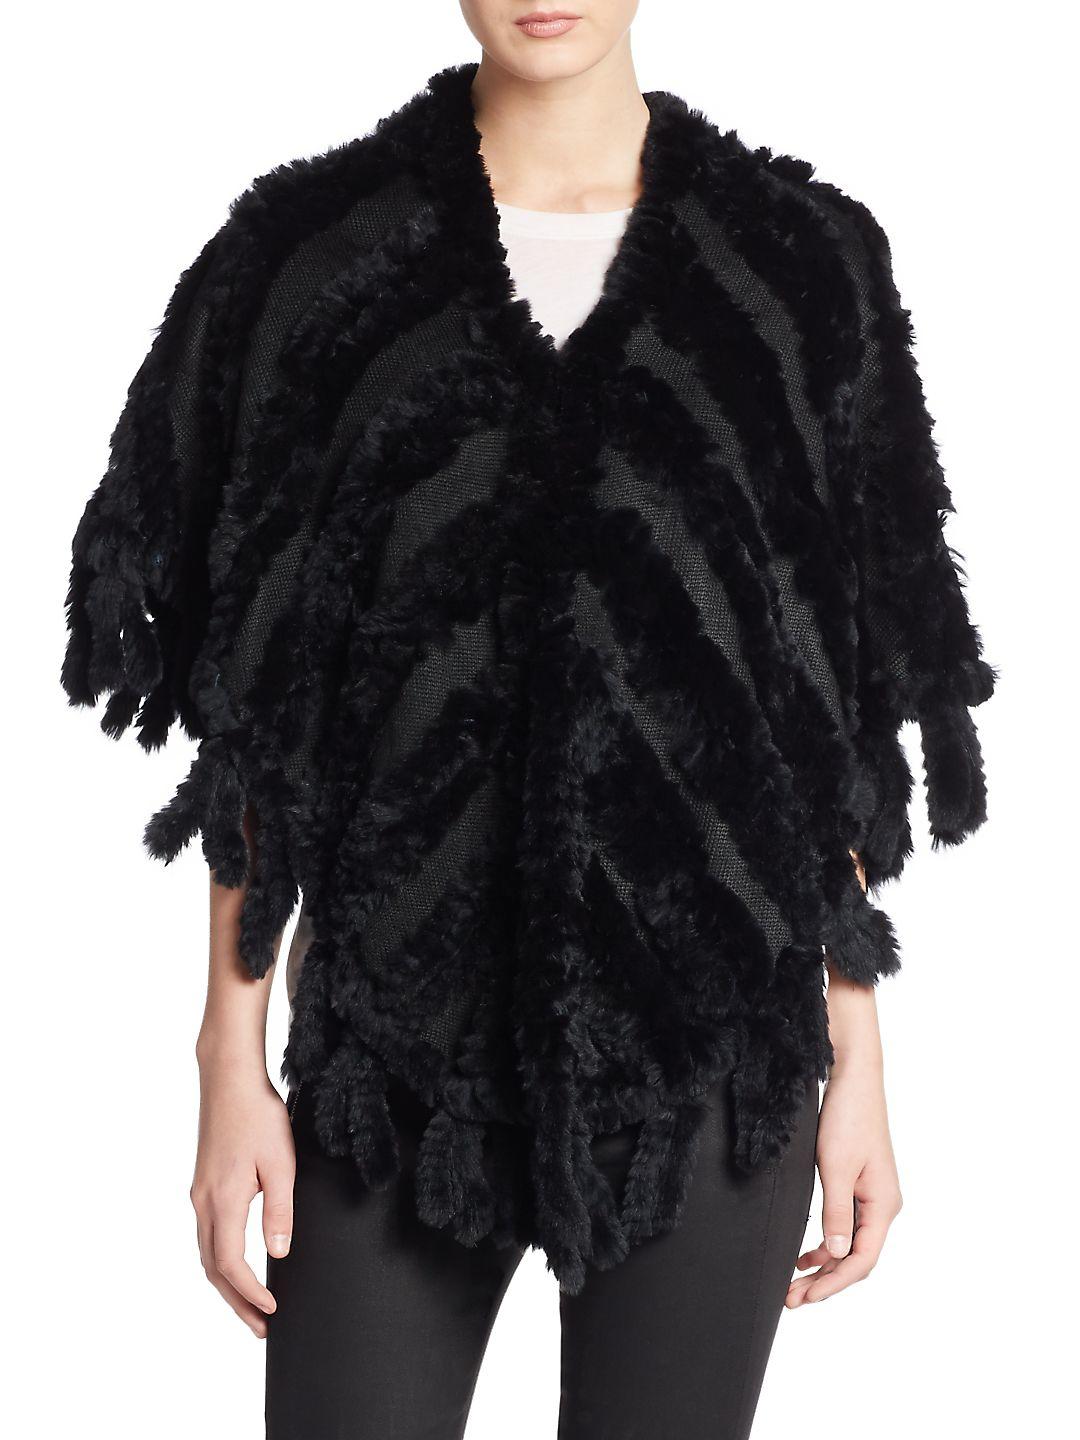 Saks Fifth Avenue Rabbit Fur Shawl in Black - Lyst